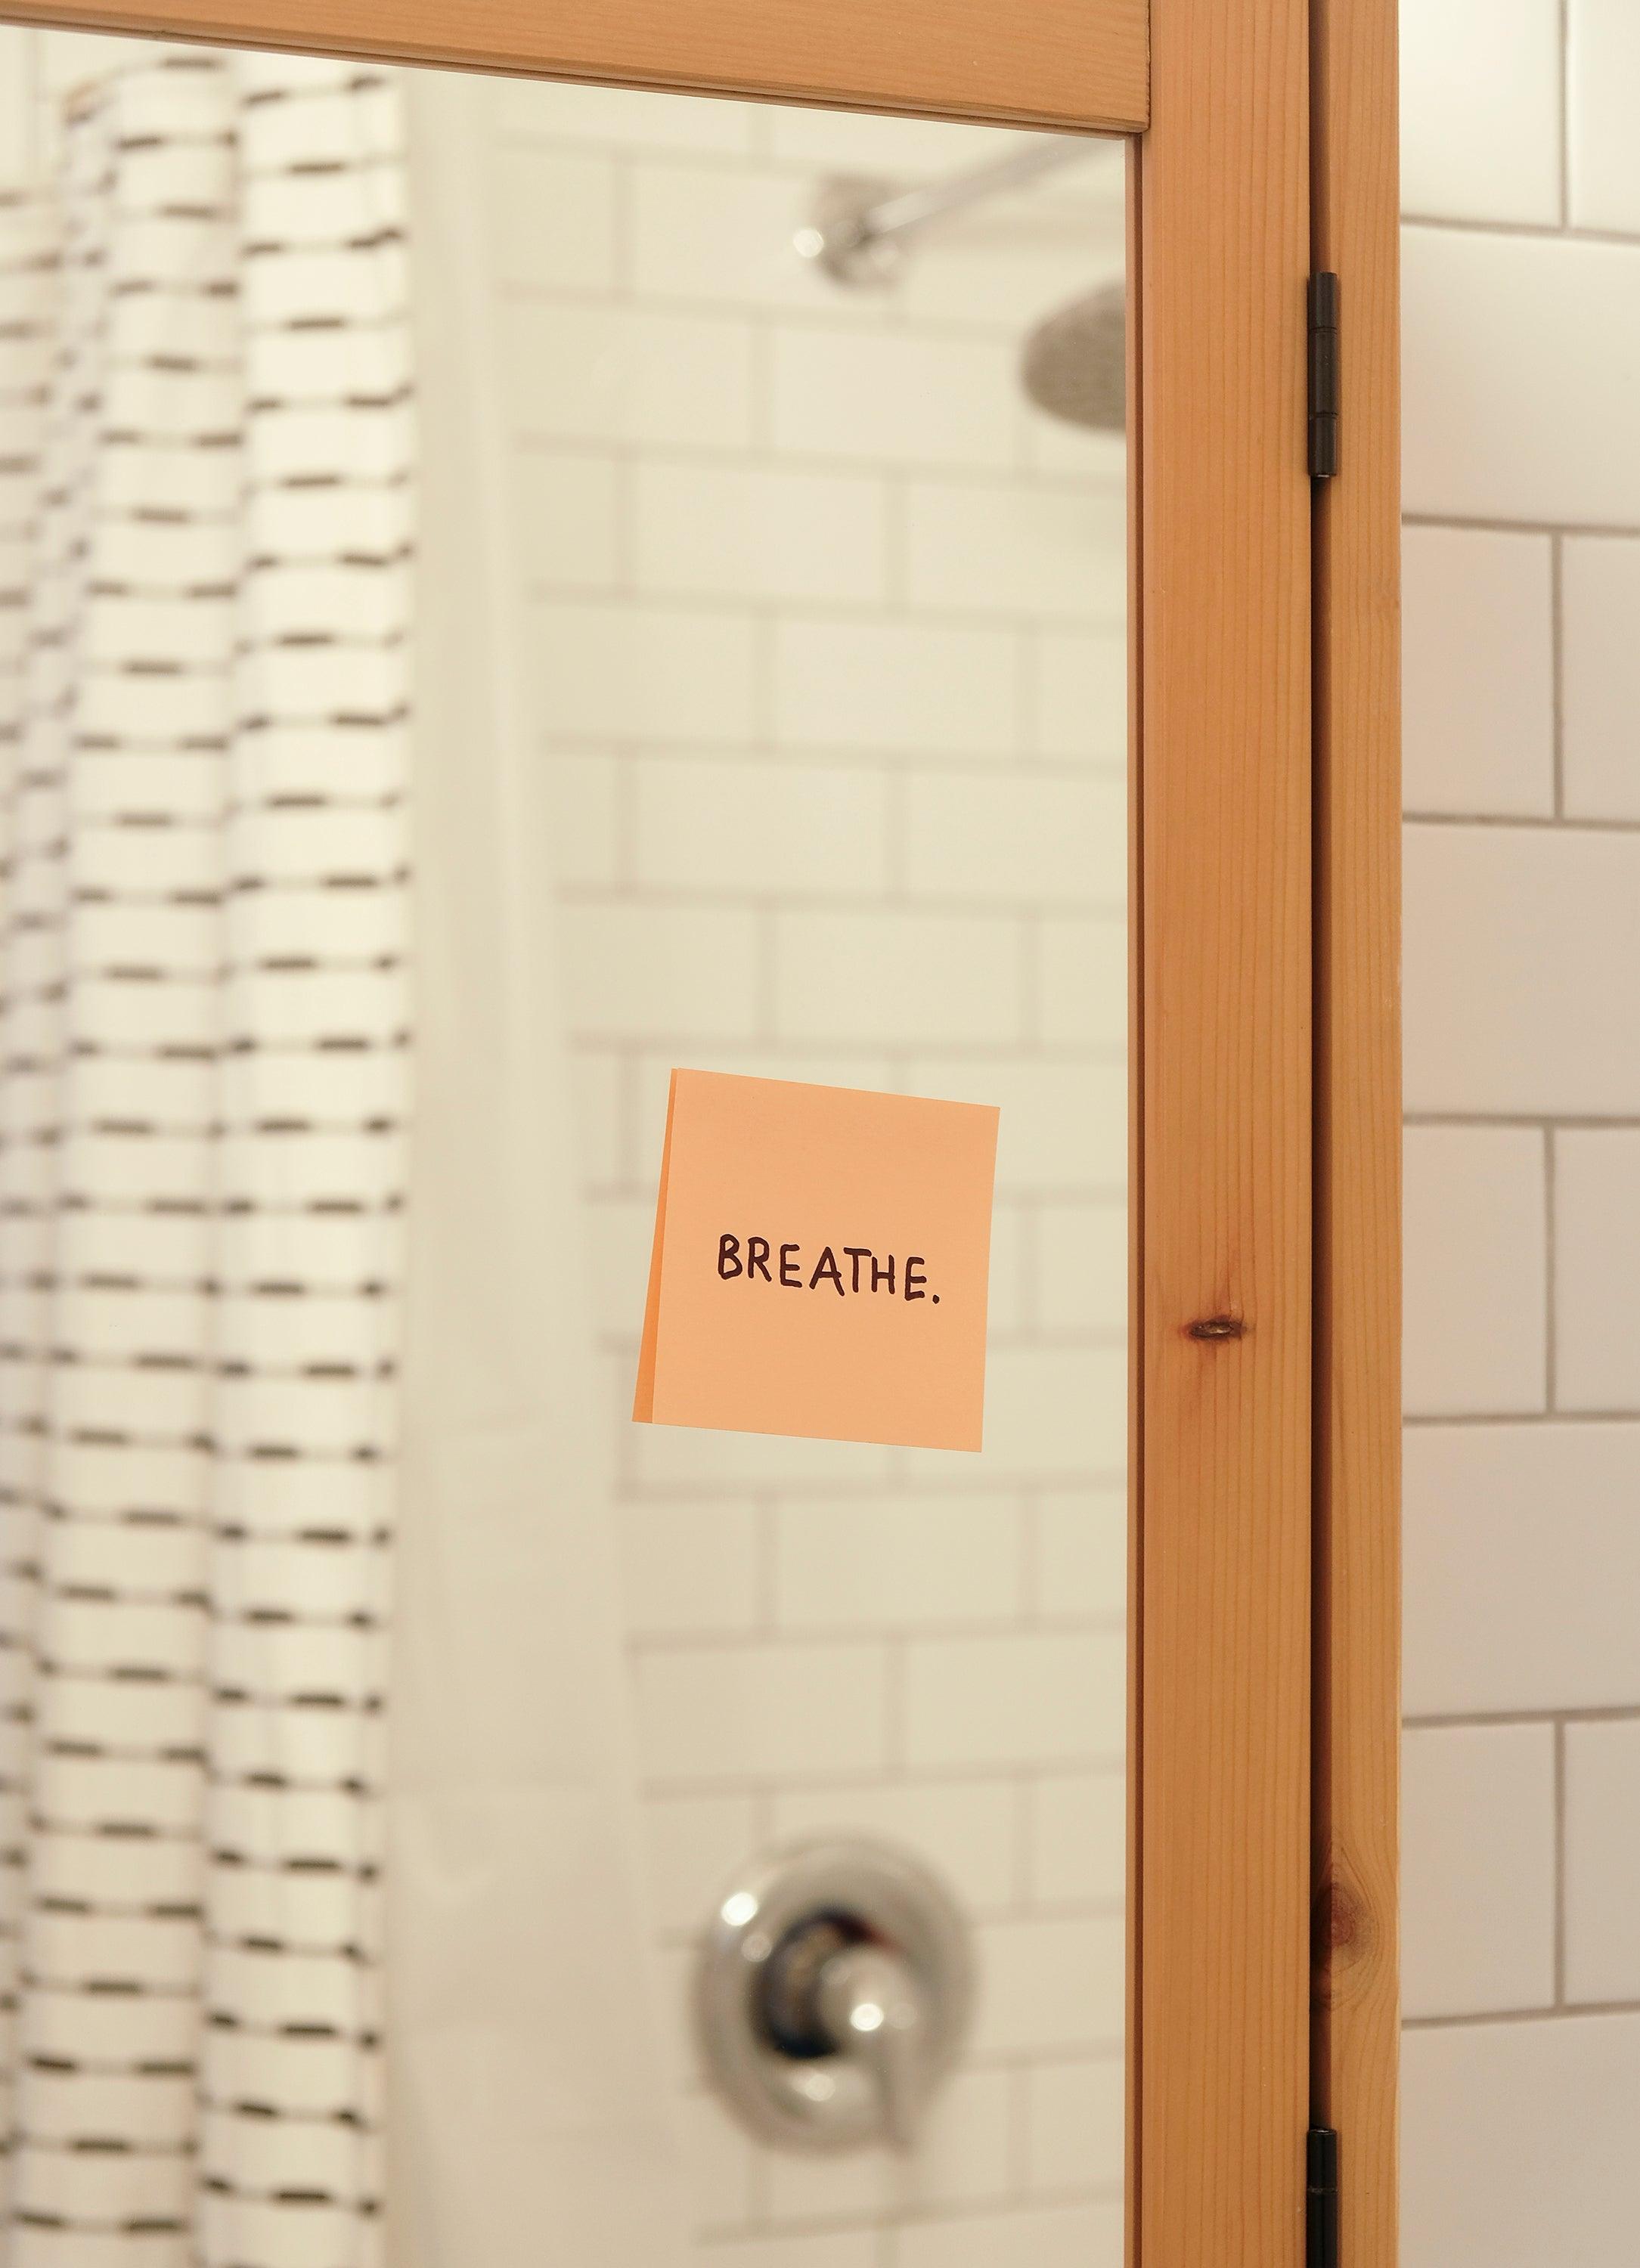 pink-note-reads-breath-on-a-bathroom-mirror - Ready Sweat Go